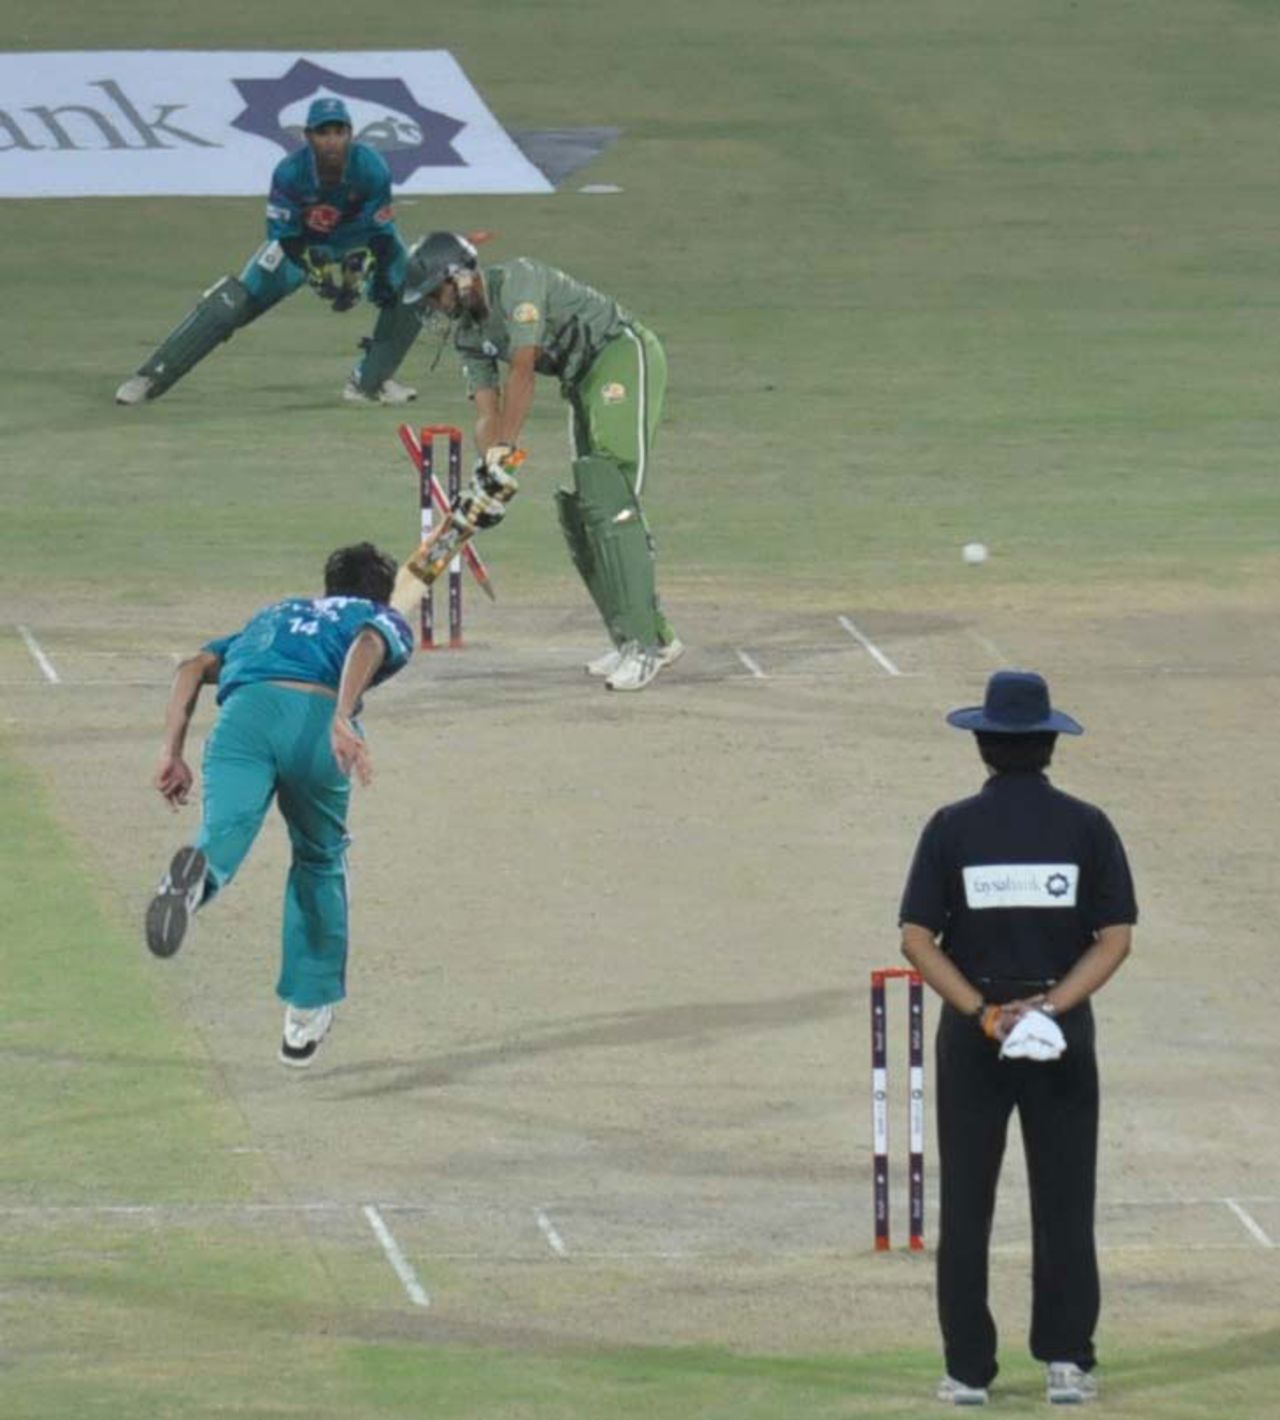 Sohail Tanvir ends Multan's innings by bowling Zulfiqar Babar, Multan v Rawalpindi, Faysal Bank Super Eight T-20 Cup, Faisalabad, June 28, 2011